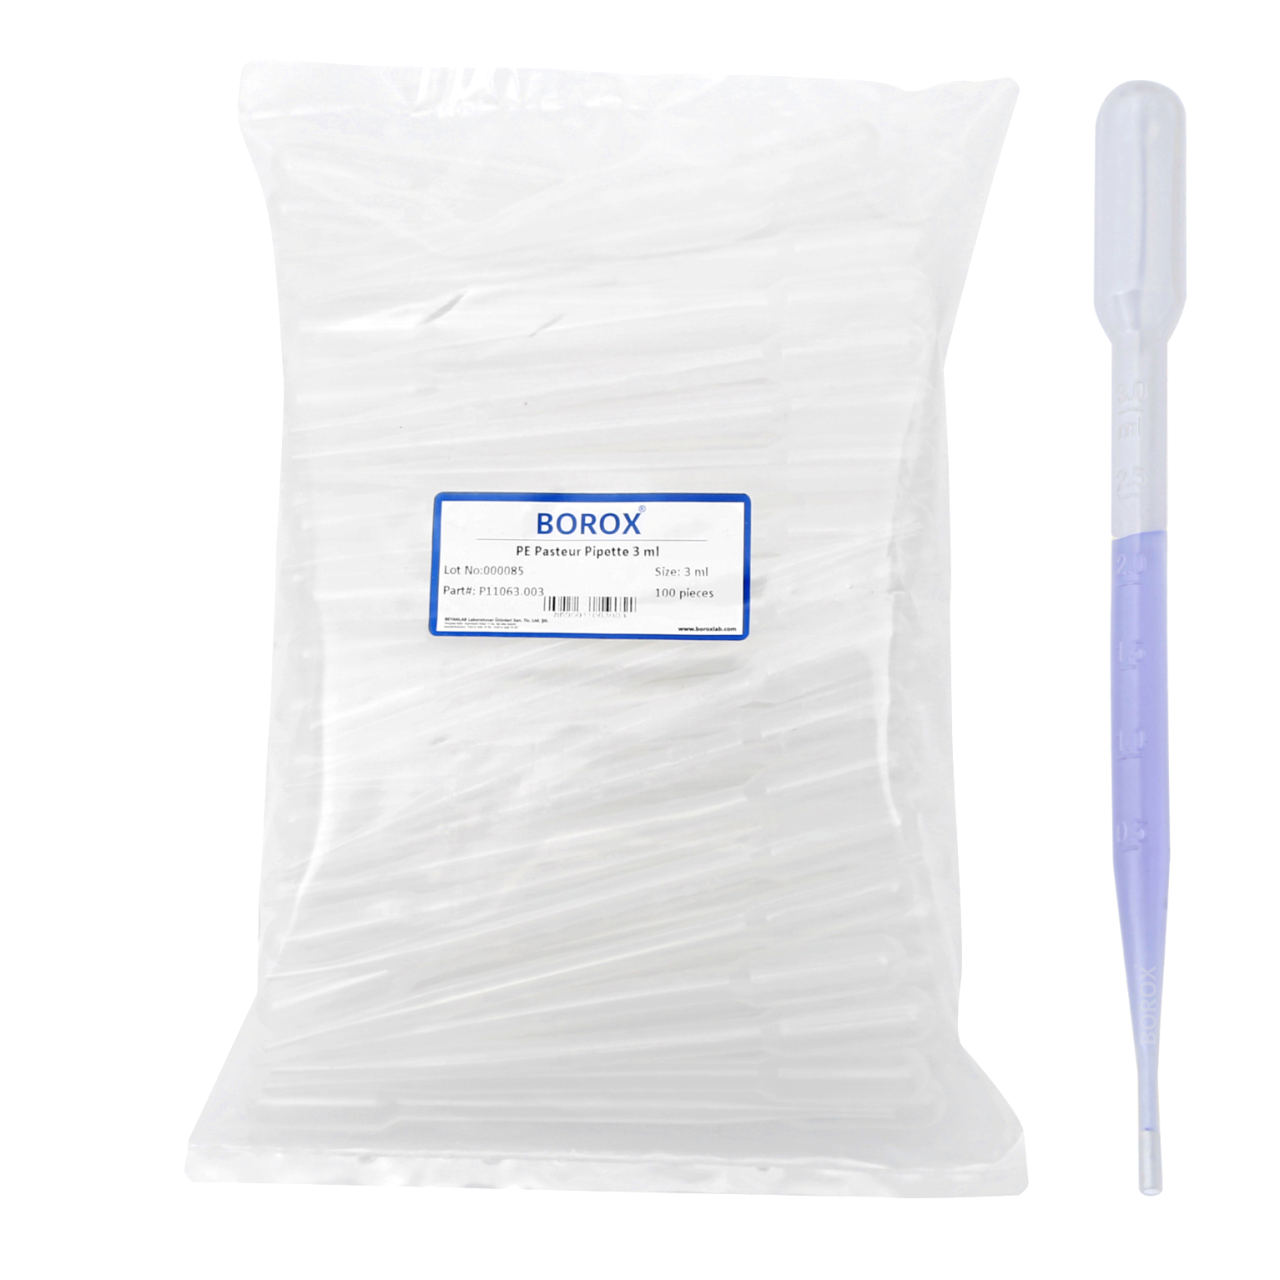 Borox Pastör Pipeti - Plastik Damlalık 0.5-3.0 ml - 100 Adet